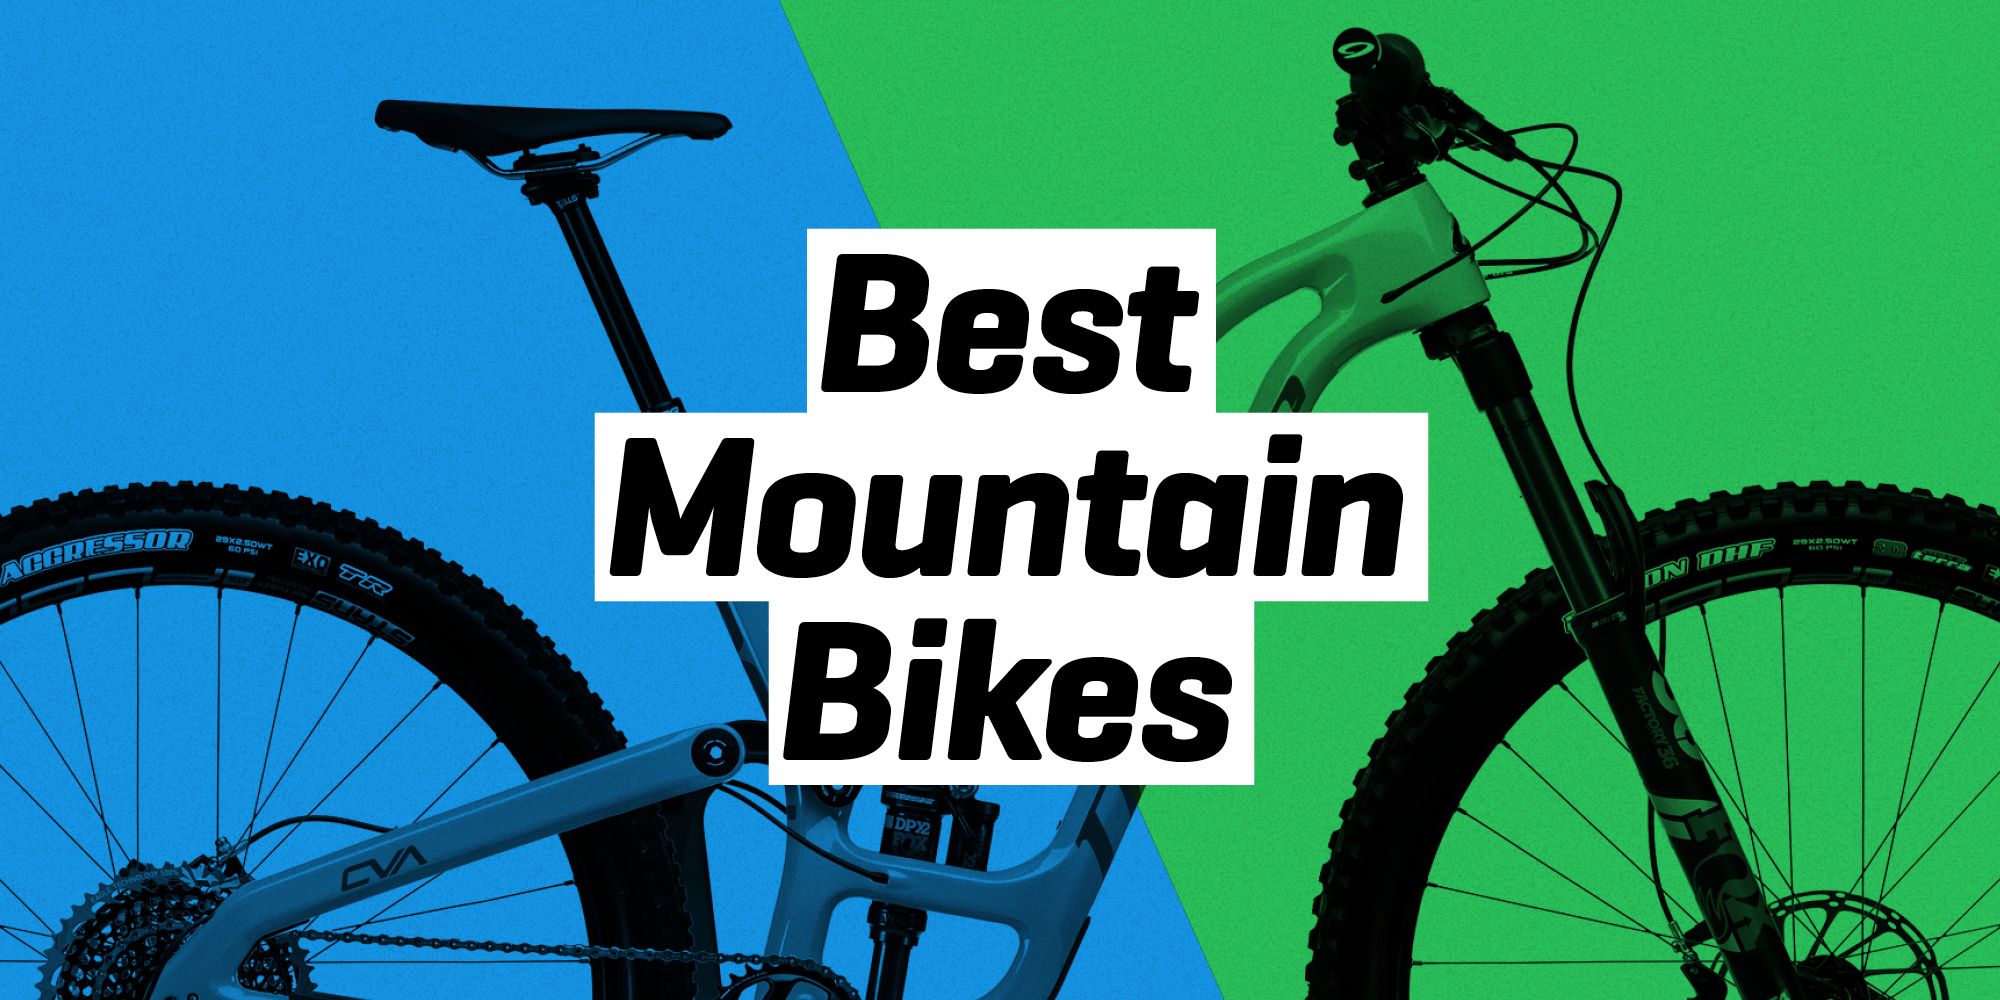 Boek draagbaar omvang The Best Mountain Bikes in 2022 - Trail, Enduro, and Hardtail Bikes